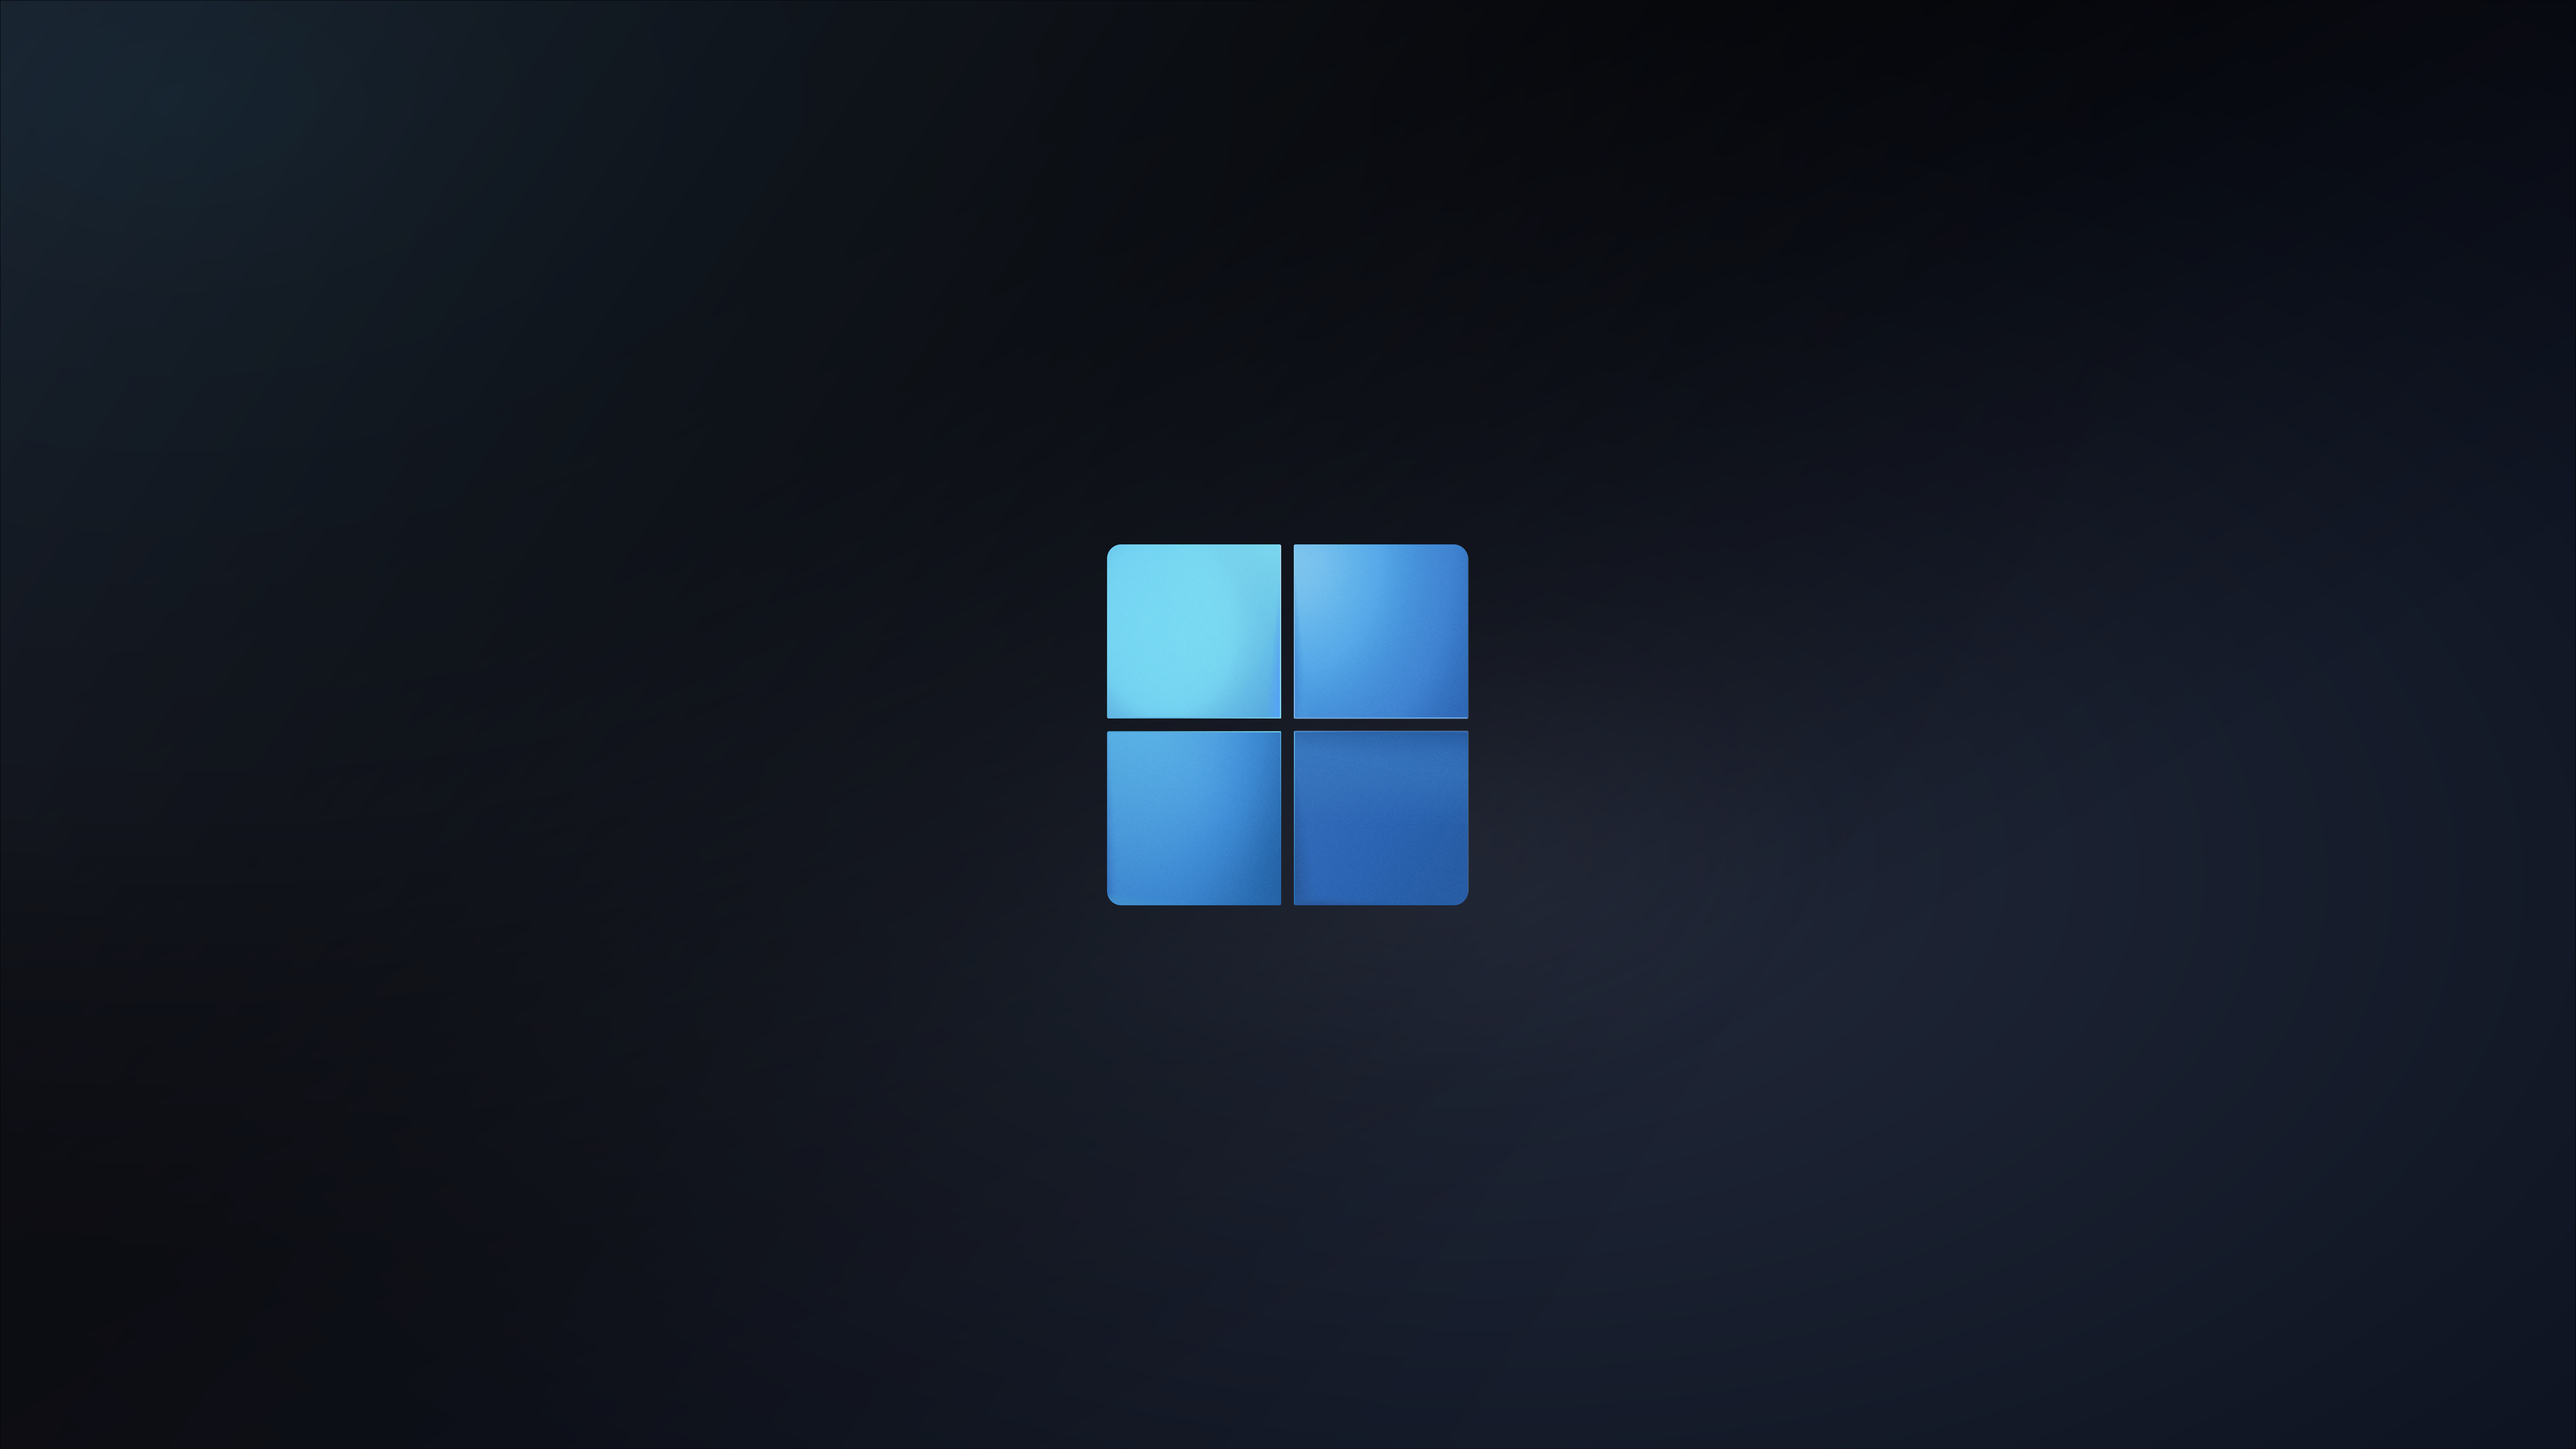 Windows 11 Logo Minimal 15k 8k HD 4k Wallpaper, Image, Background, Photo and Picture